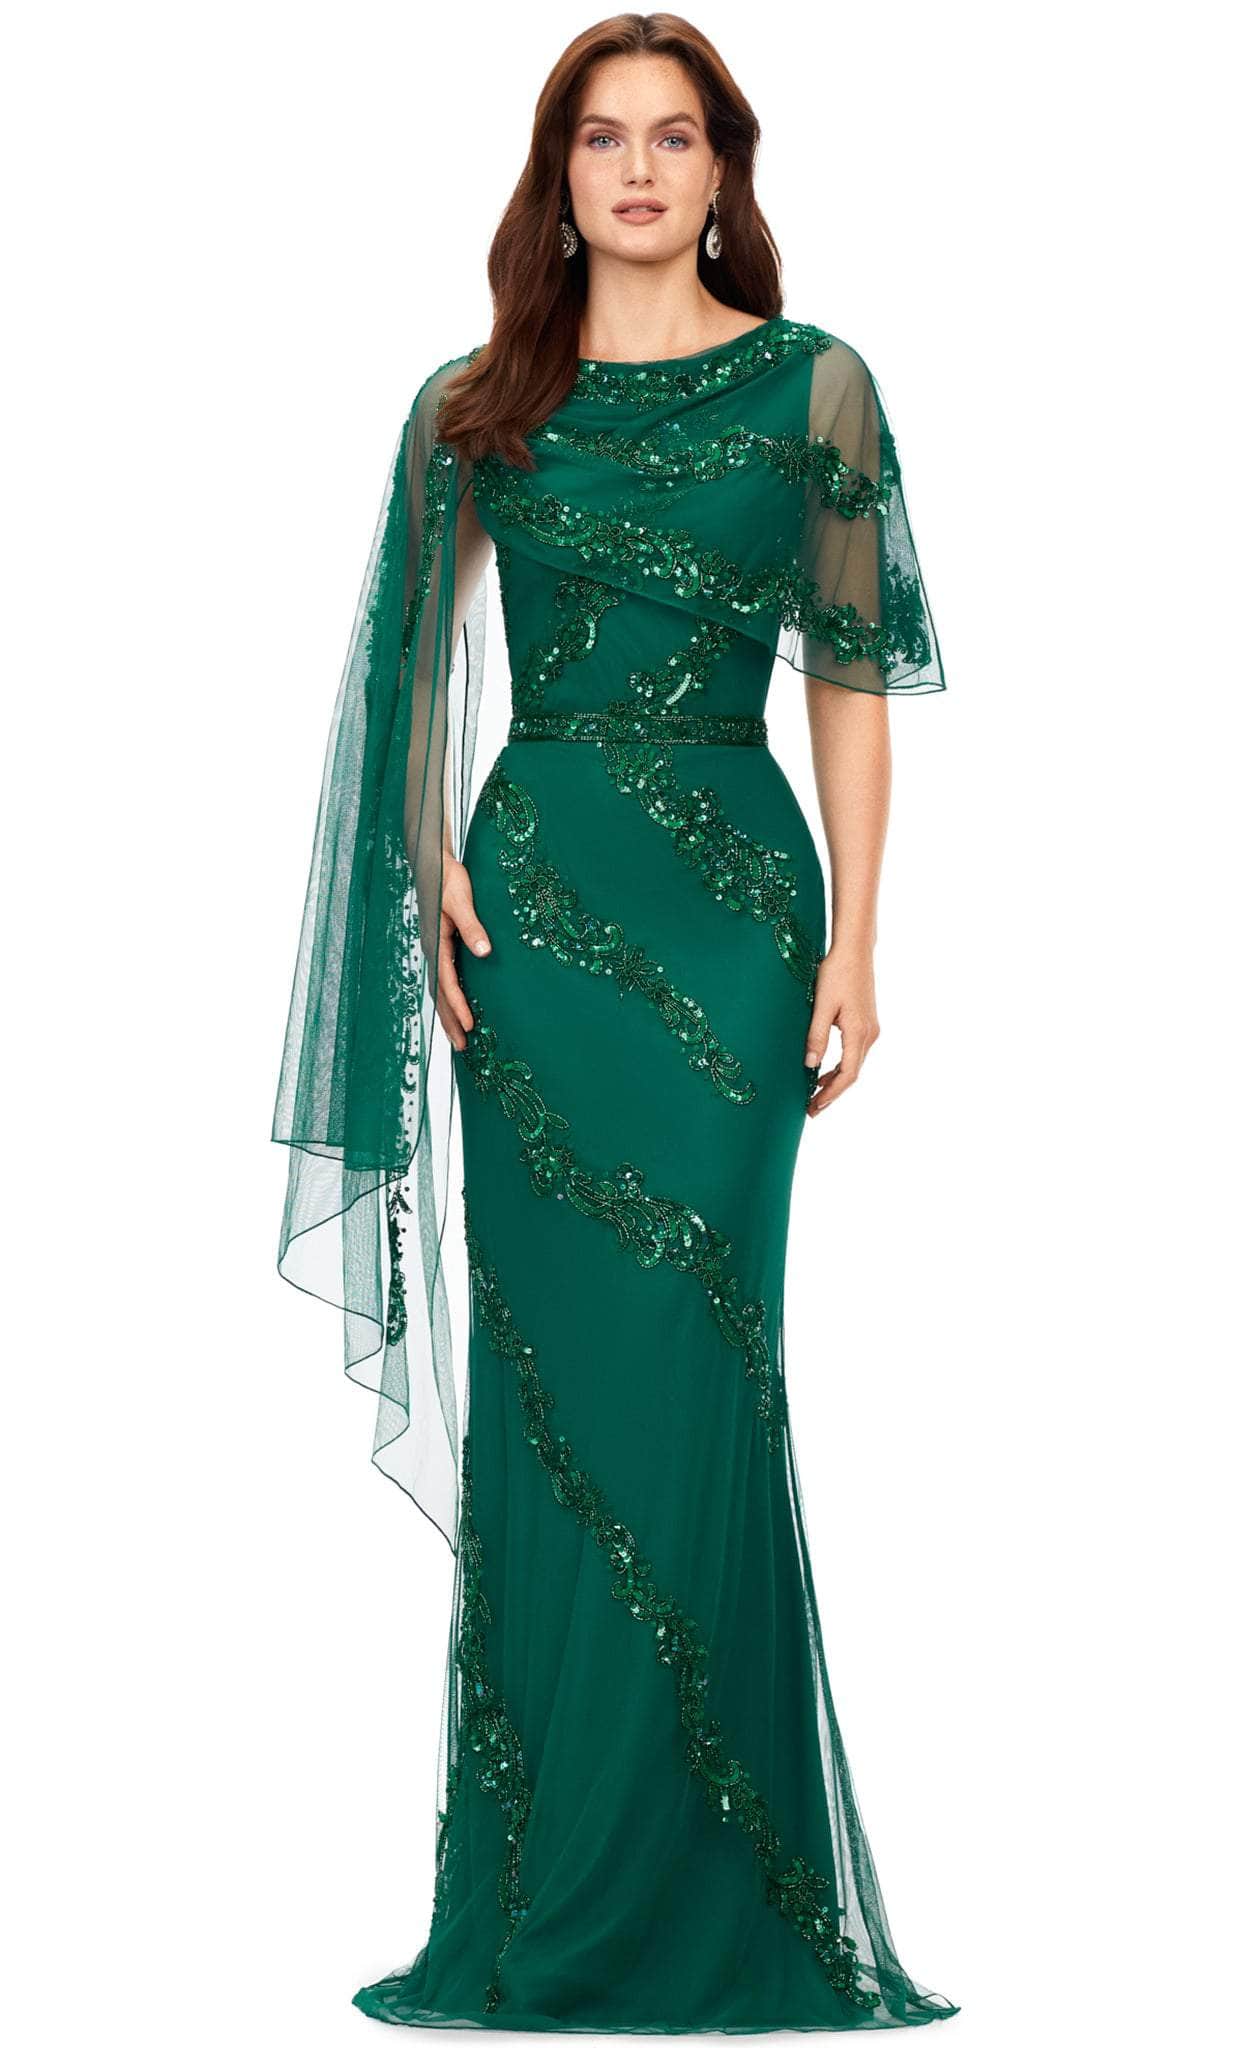 Ashley Lauren 11213 - Asymmetrical Overlay Evening Gown
